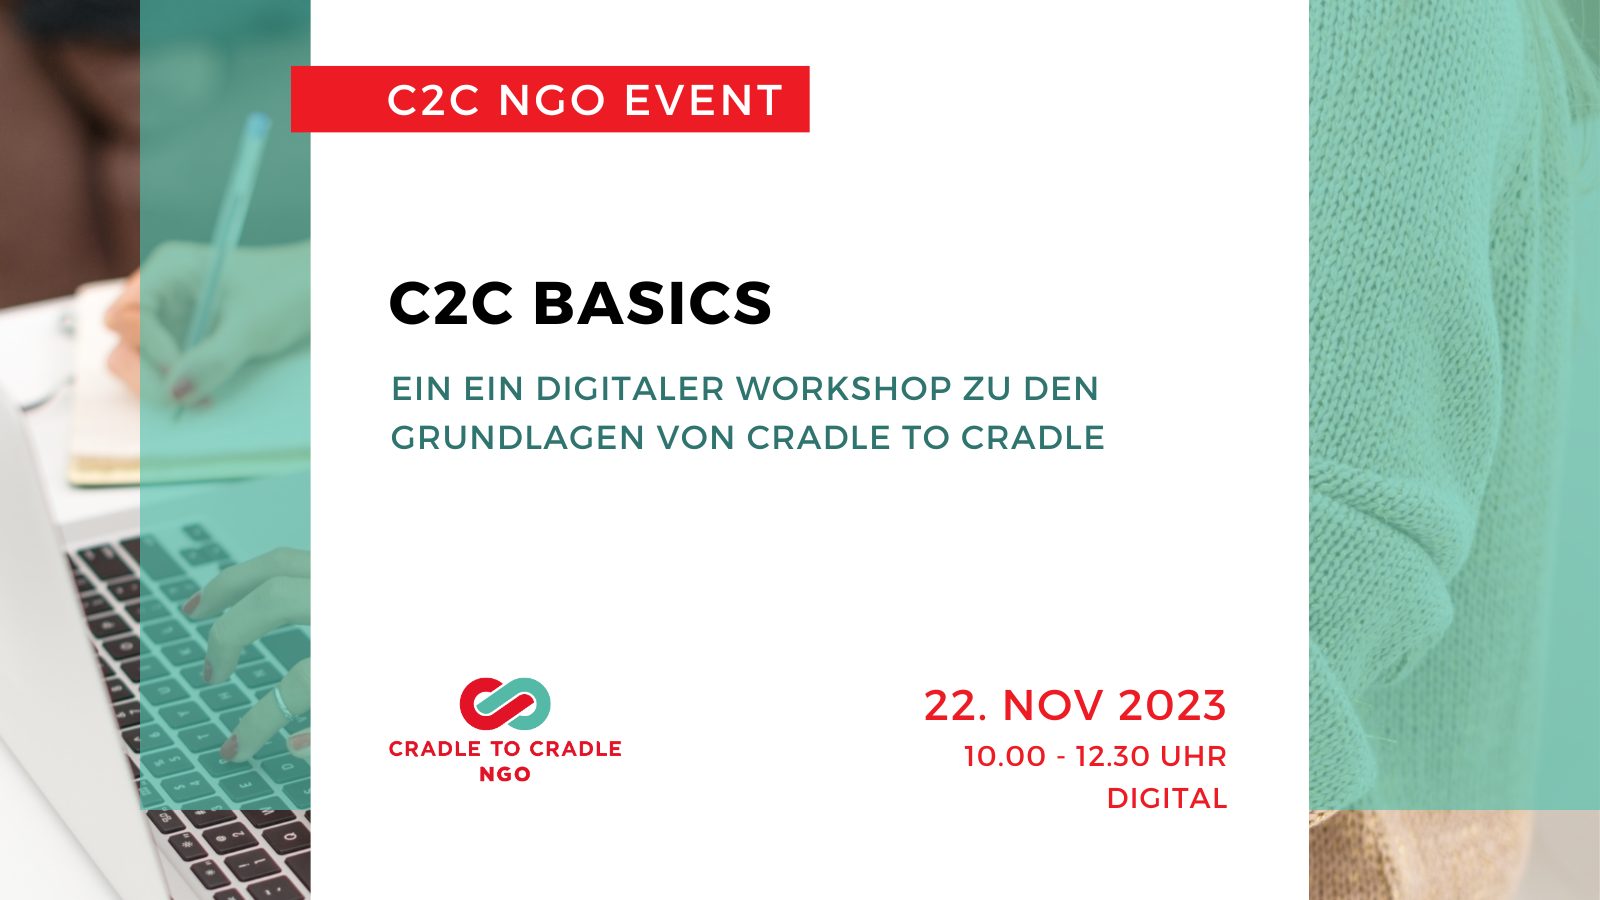 Event C2C Basics - digitaler Workshop